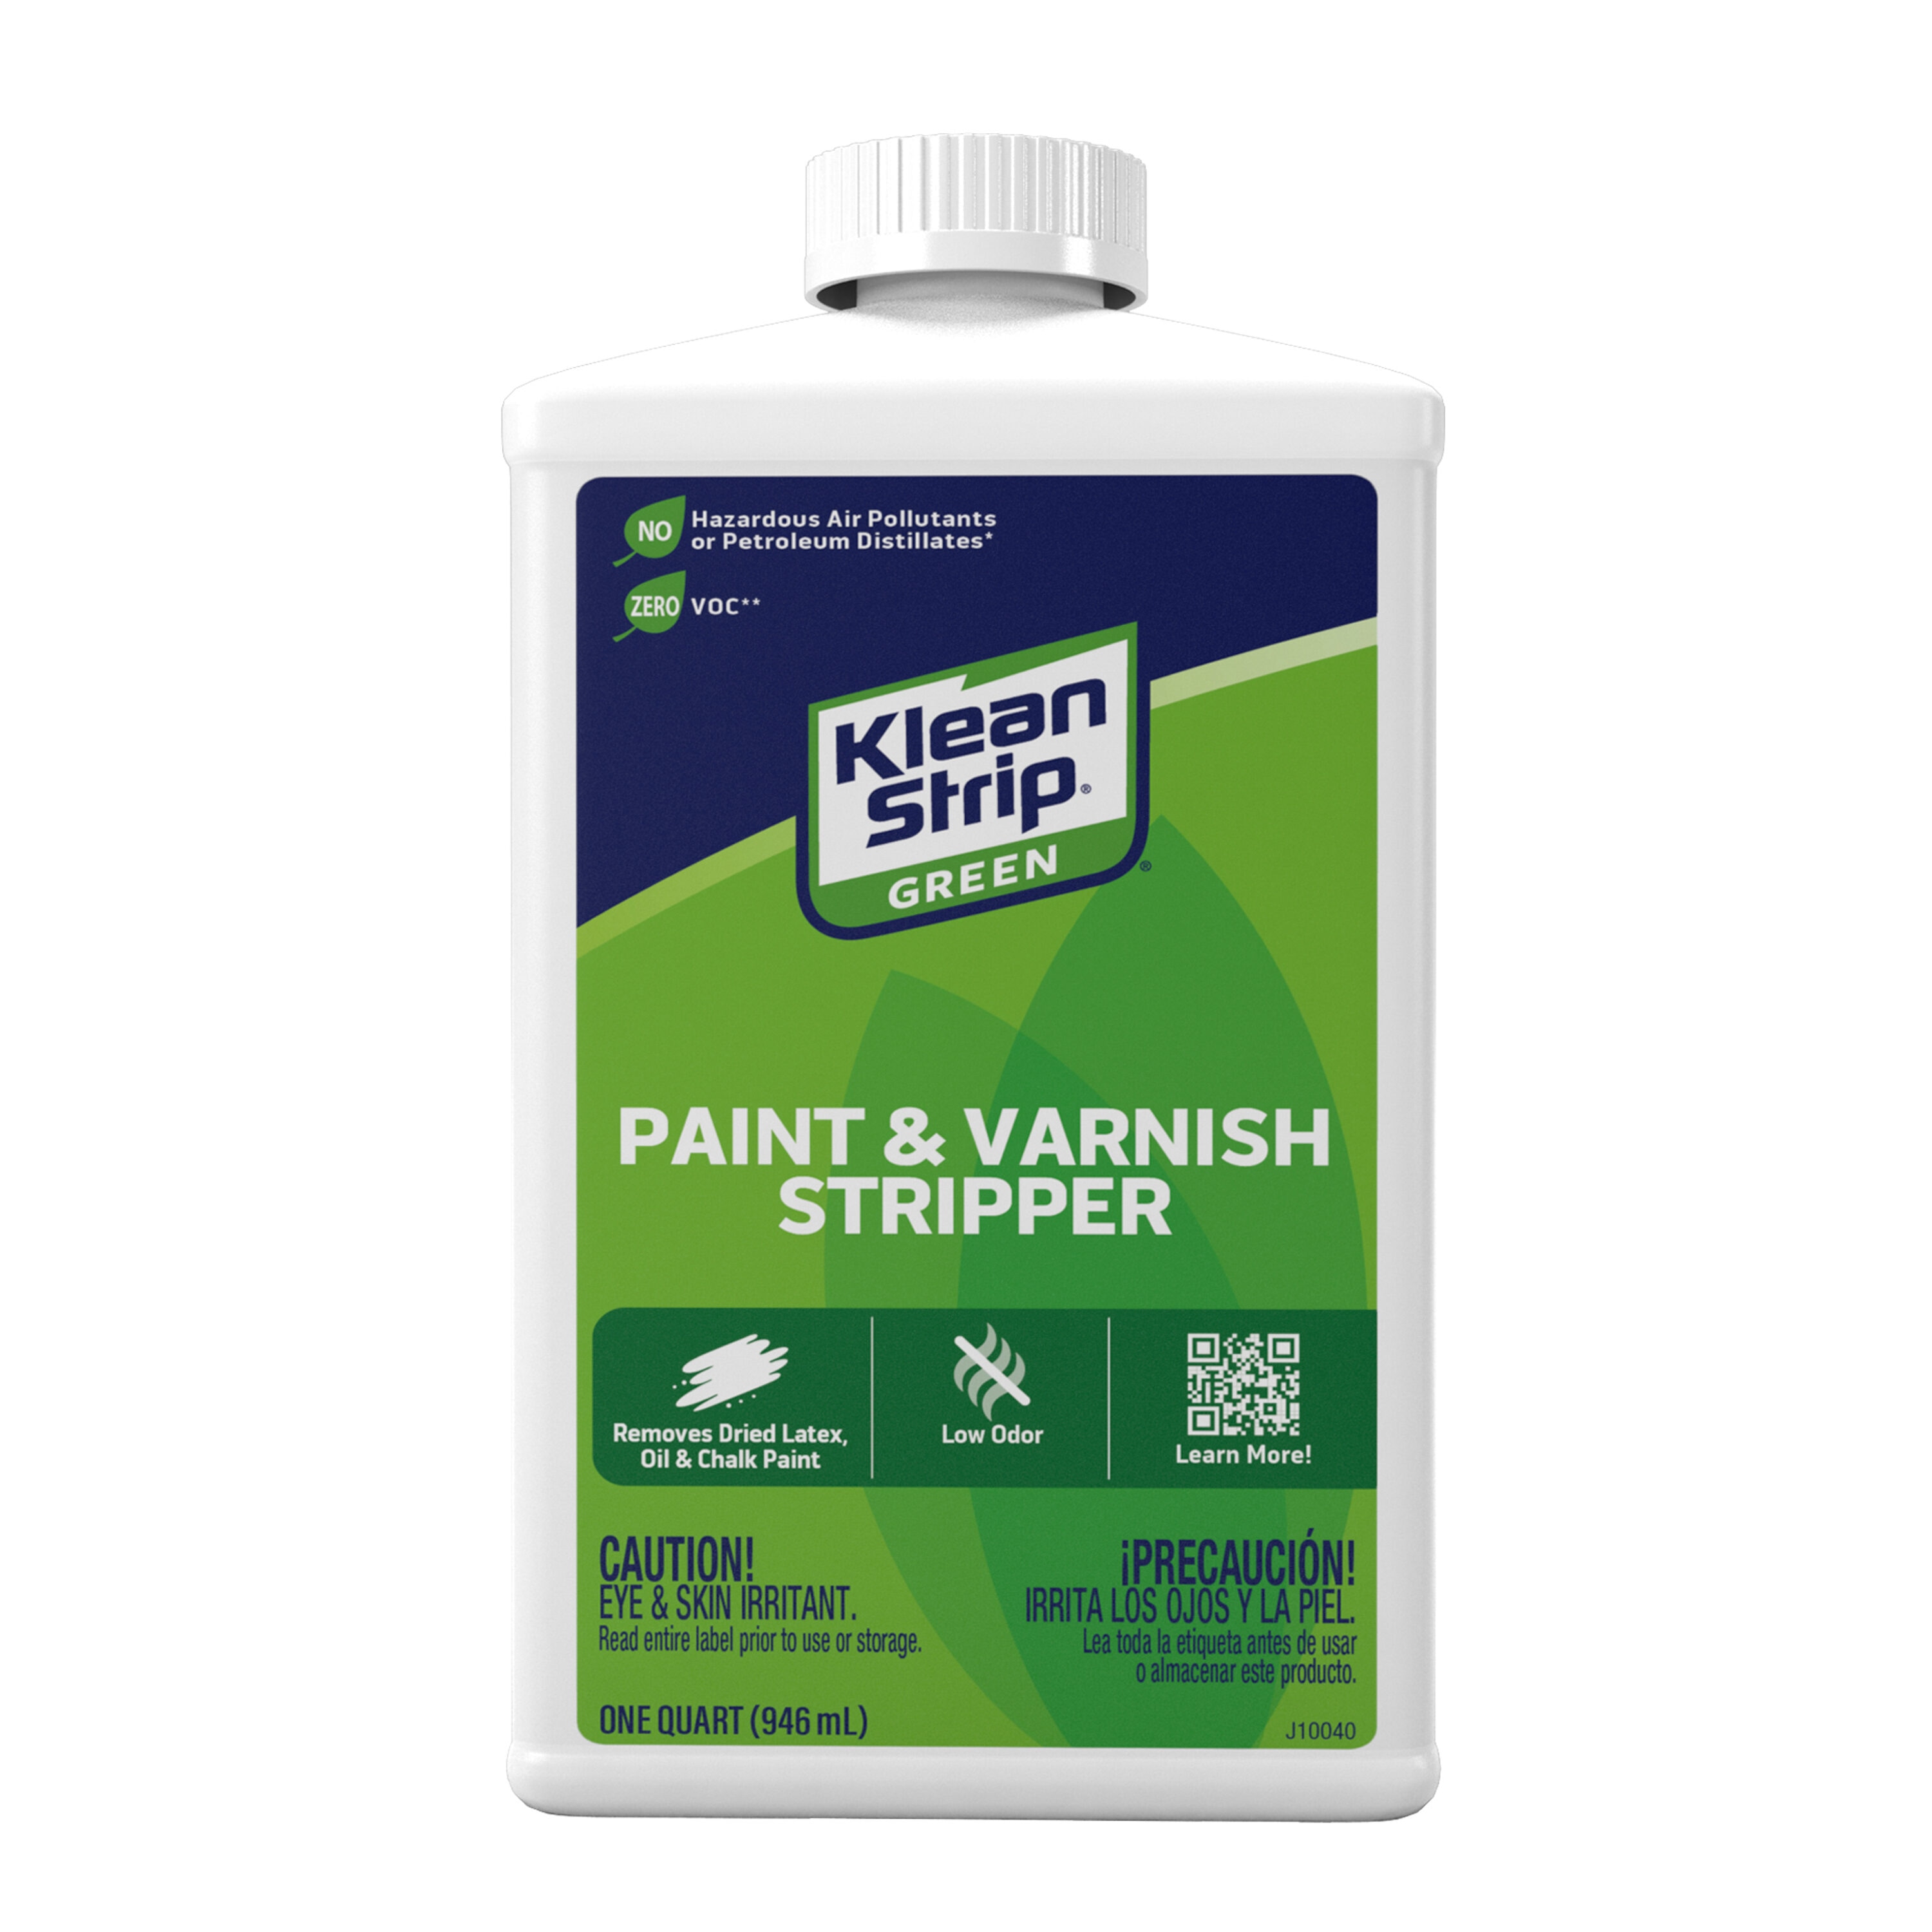 Klean Strip Green Odorless Mineral Spirits - 1 g jug